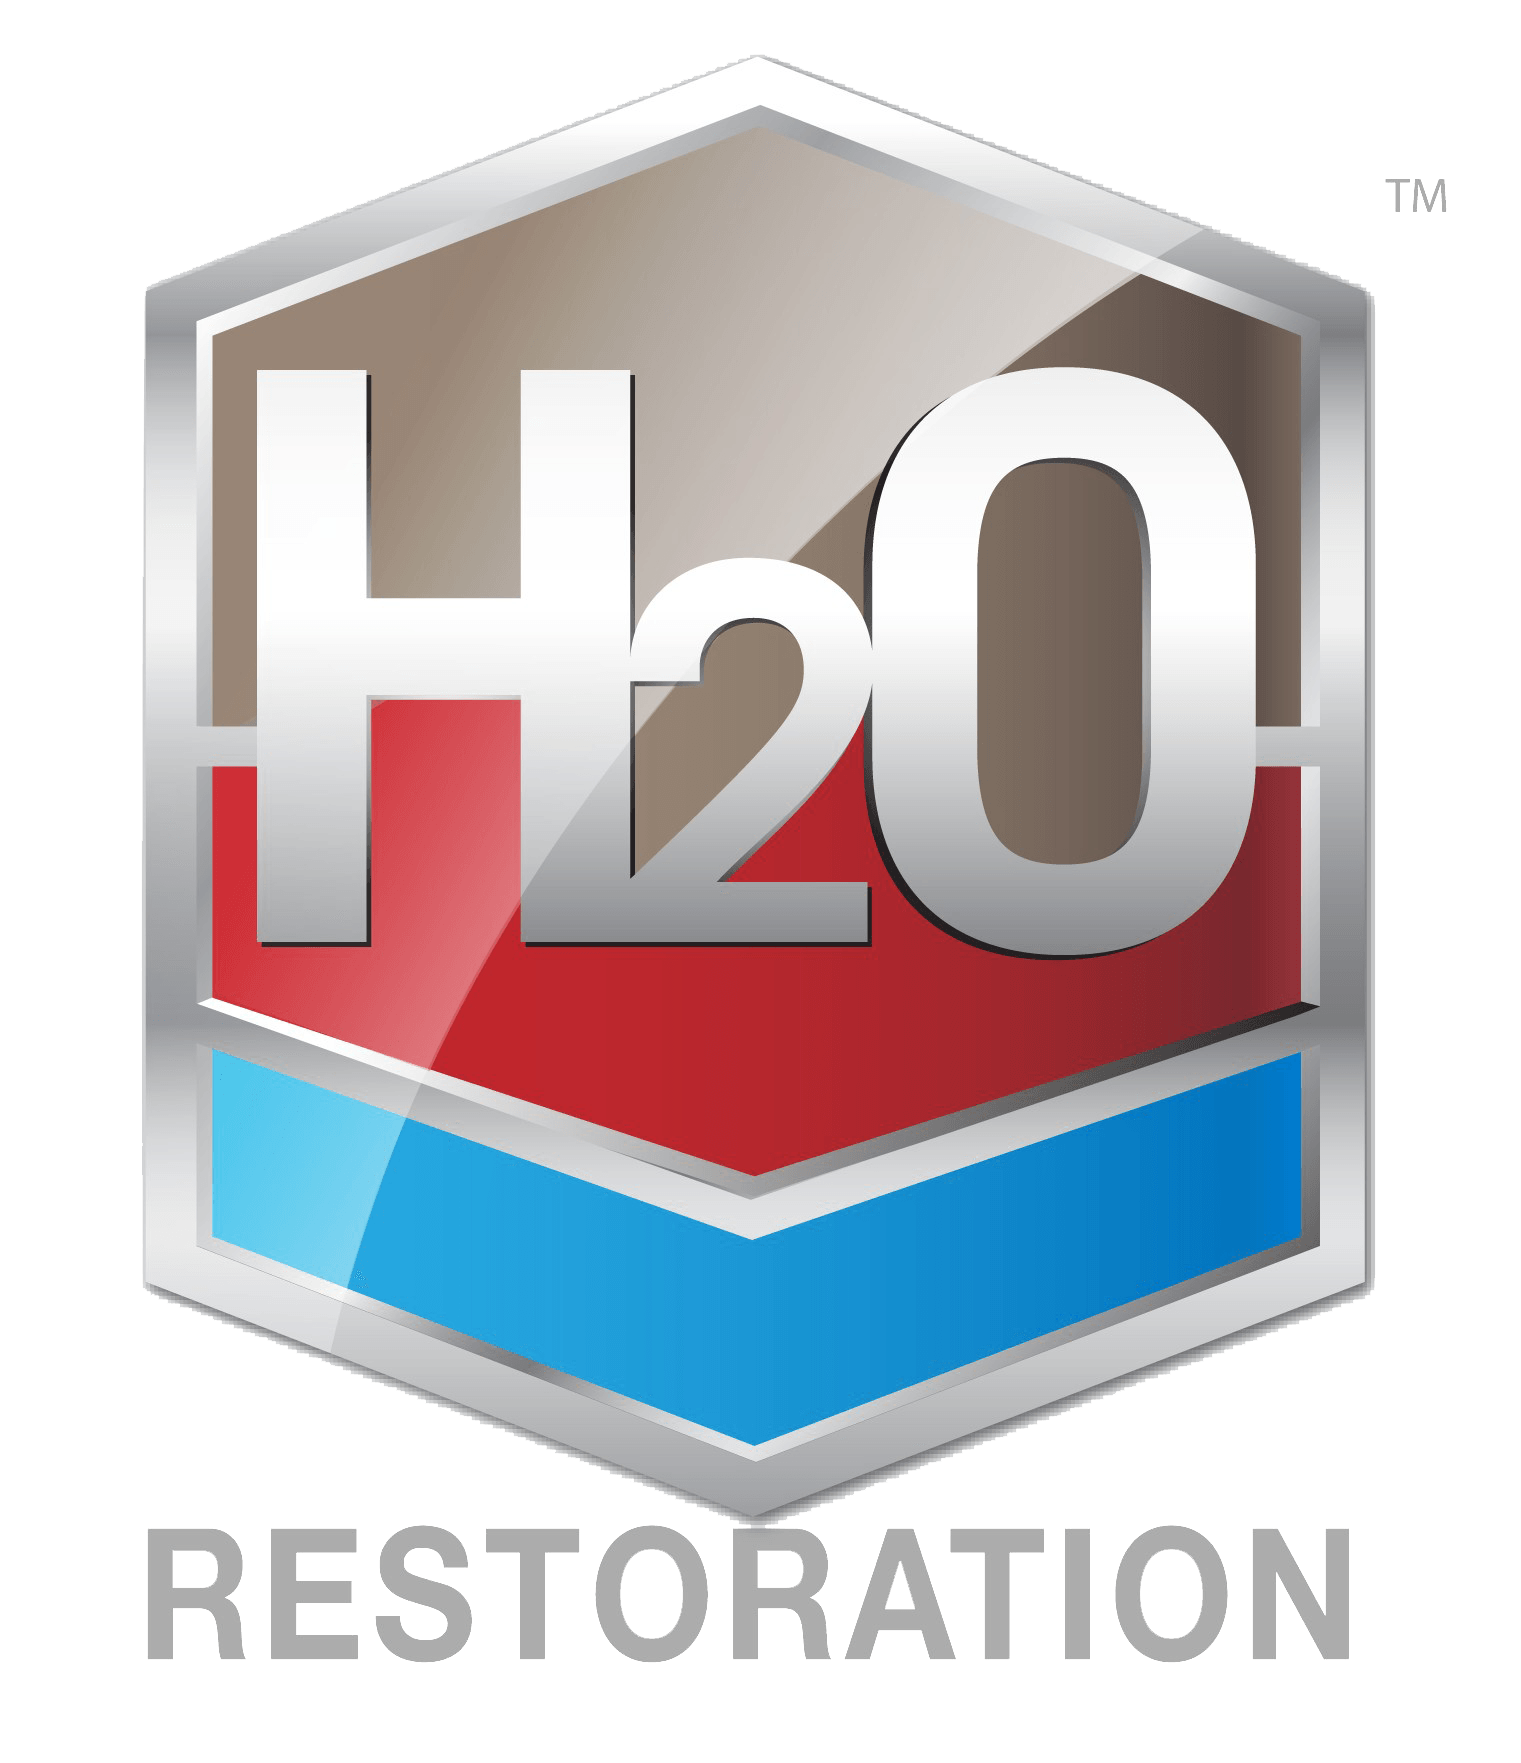 H2O Restoration Logo